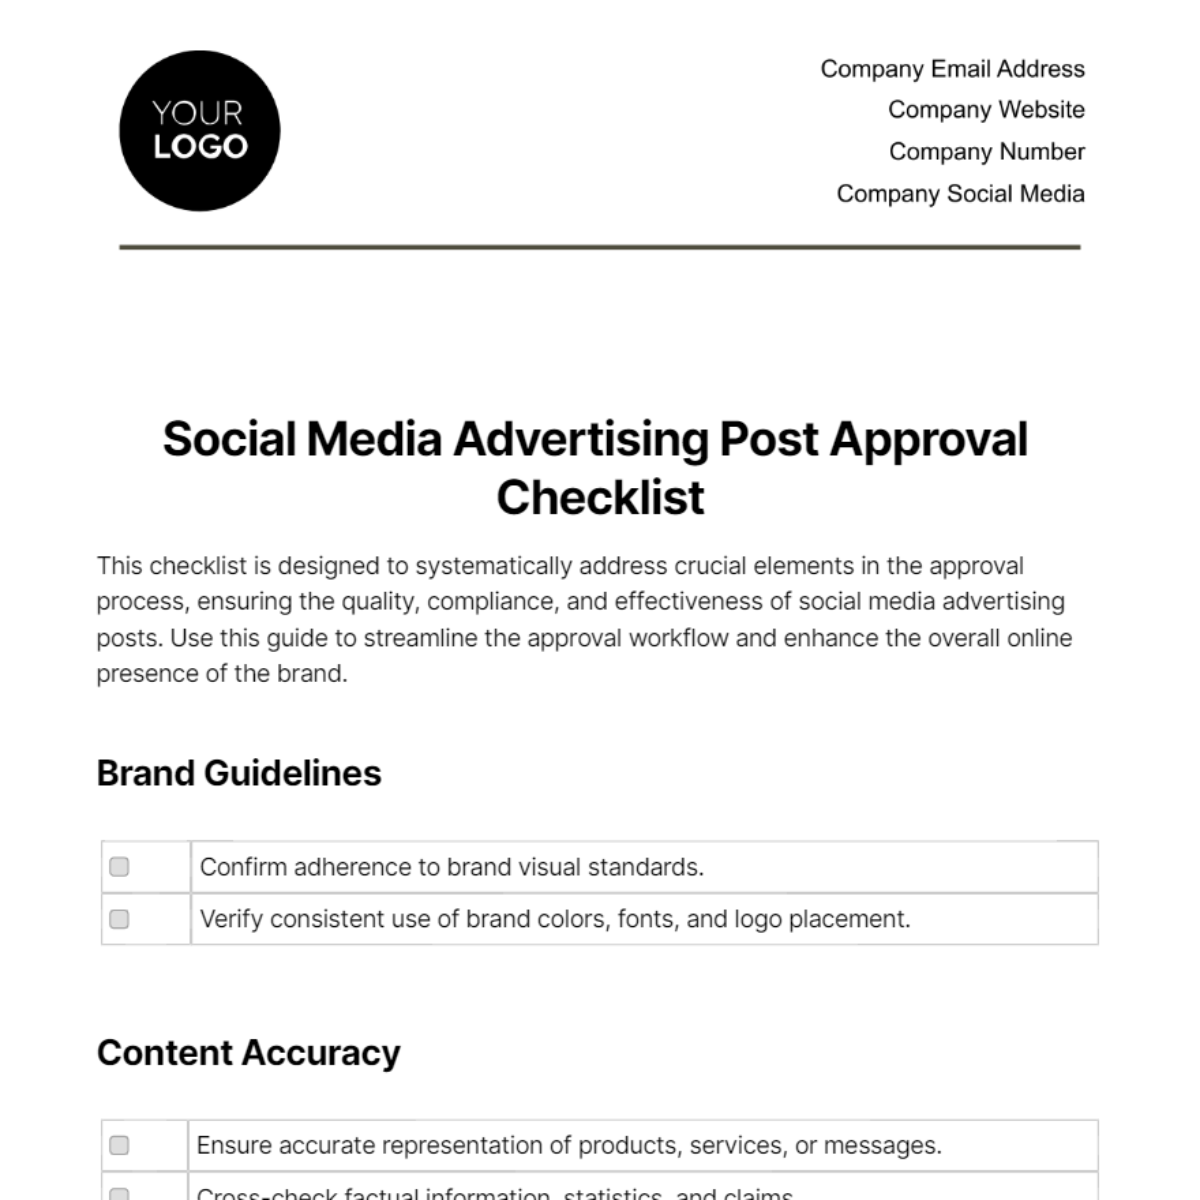 Social Media Advertising Post Approval Checklist Template